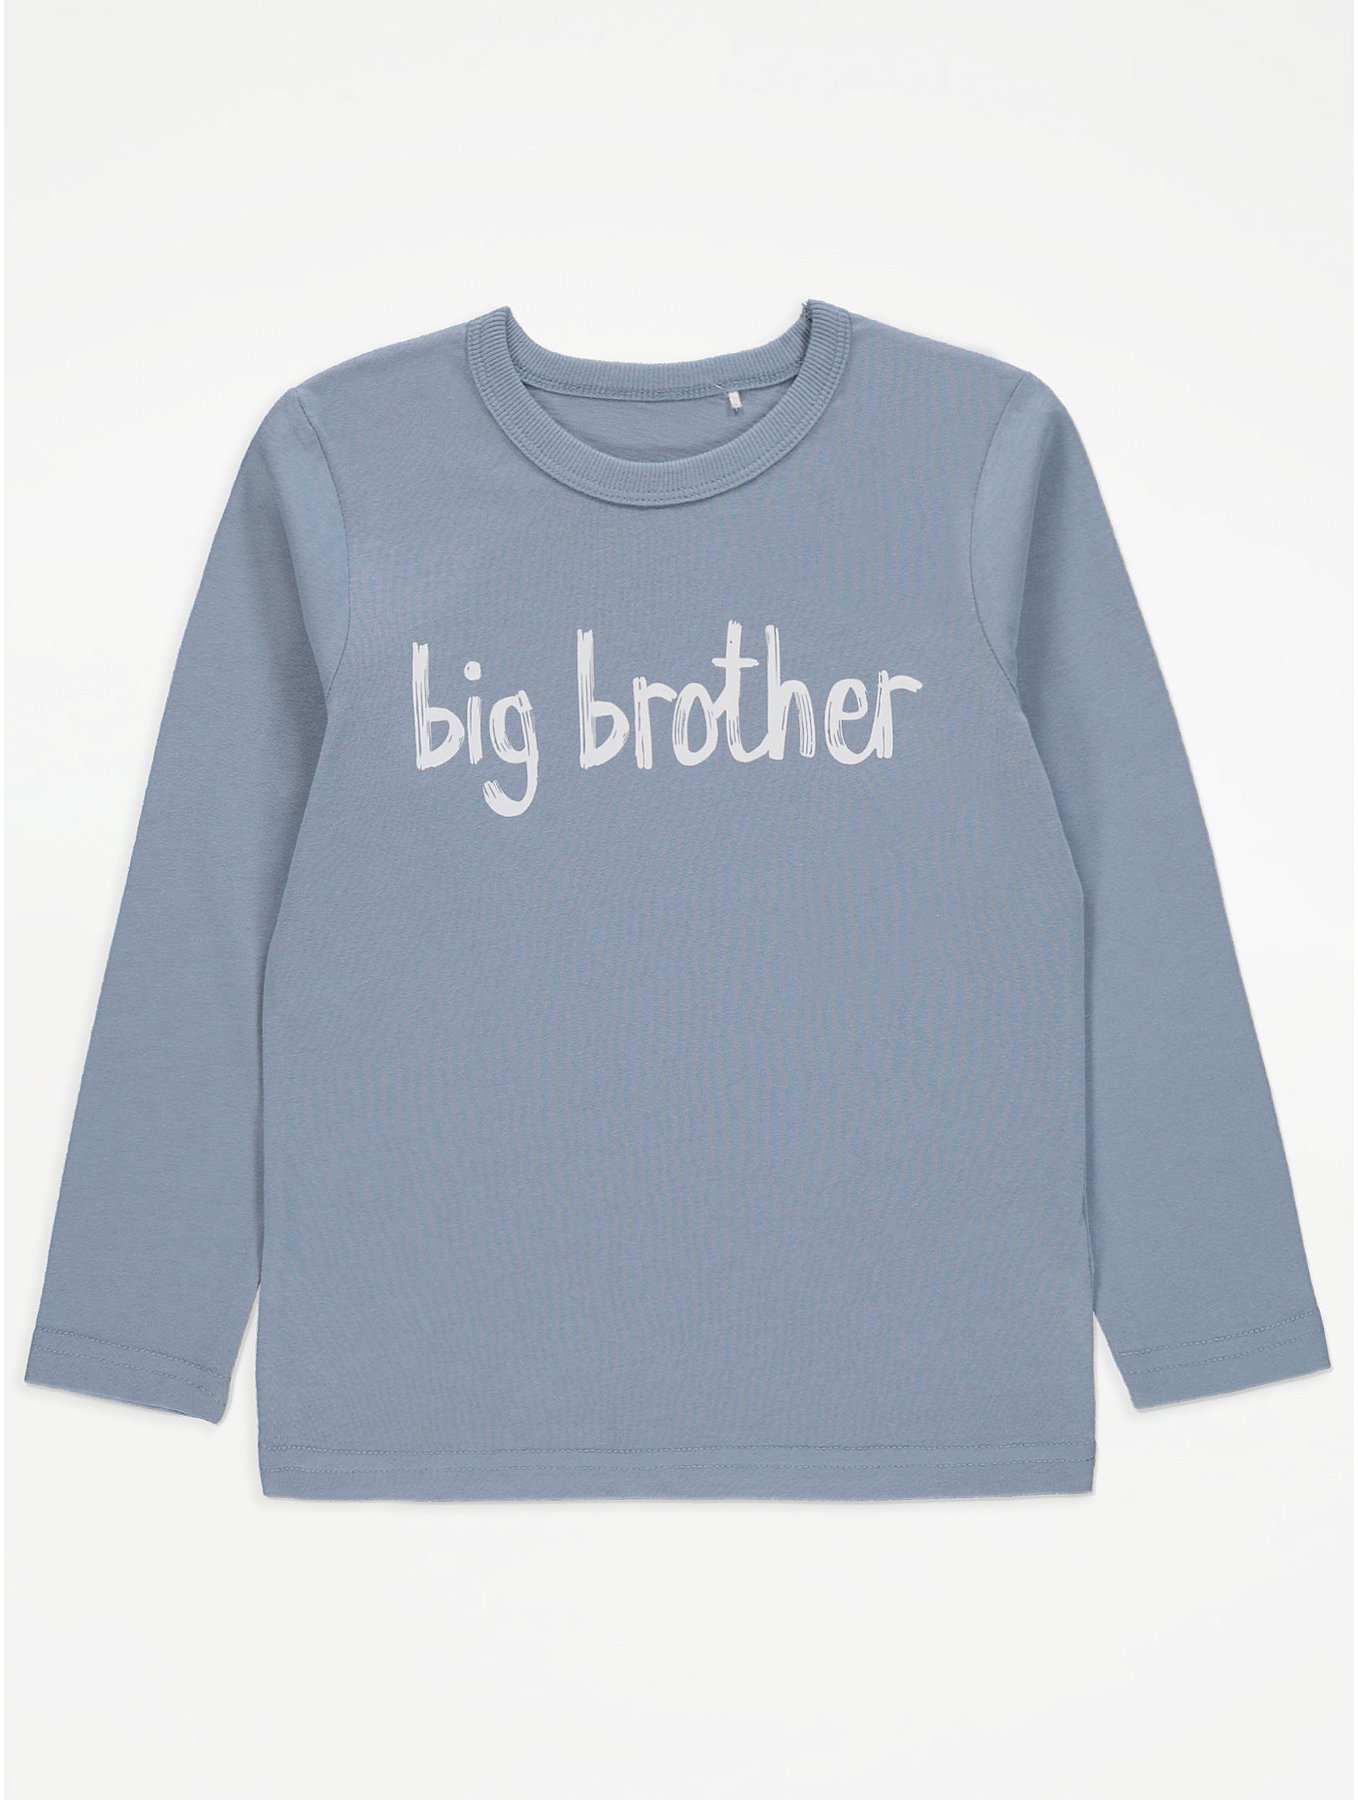 Asda Boys ‘brother’ t shirt George @ Asda age 6-7 years. 